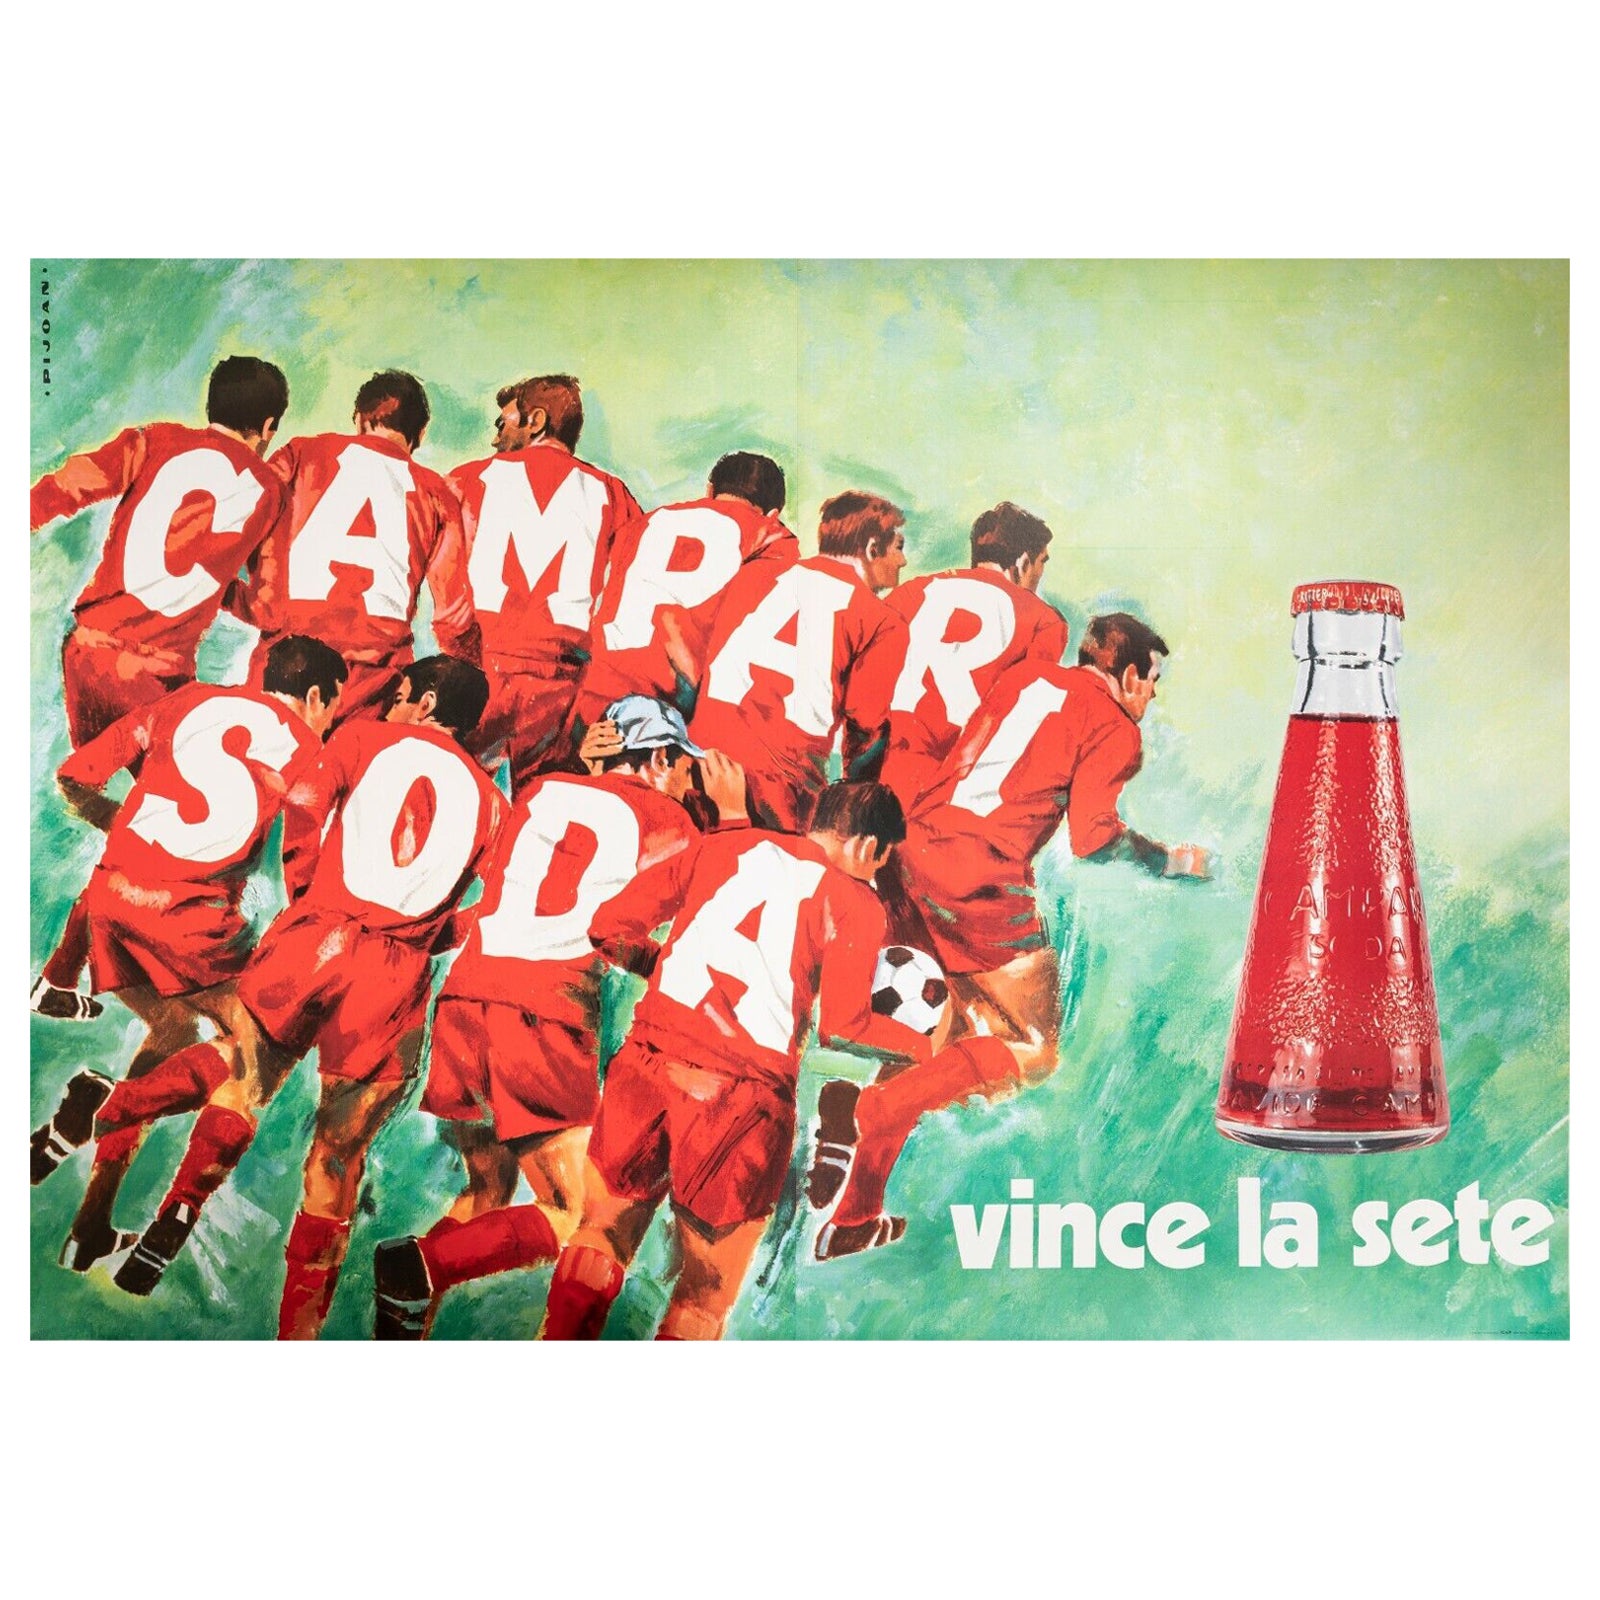 Original Vintage Poster-Pijoan-Campari Soda-Soccer-Liqueur, c.1970 For Sale